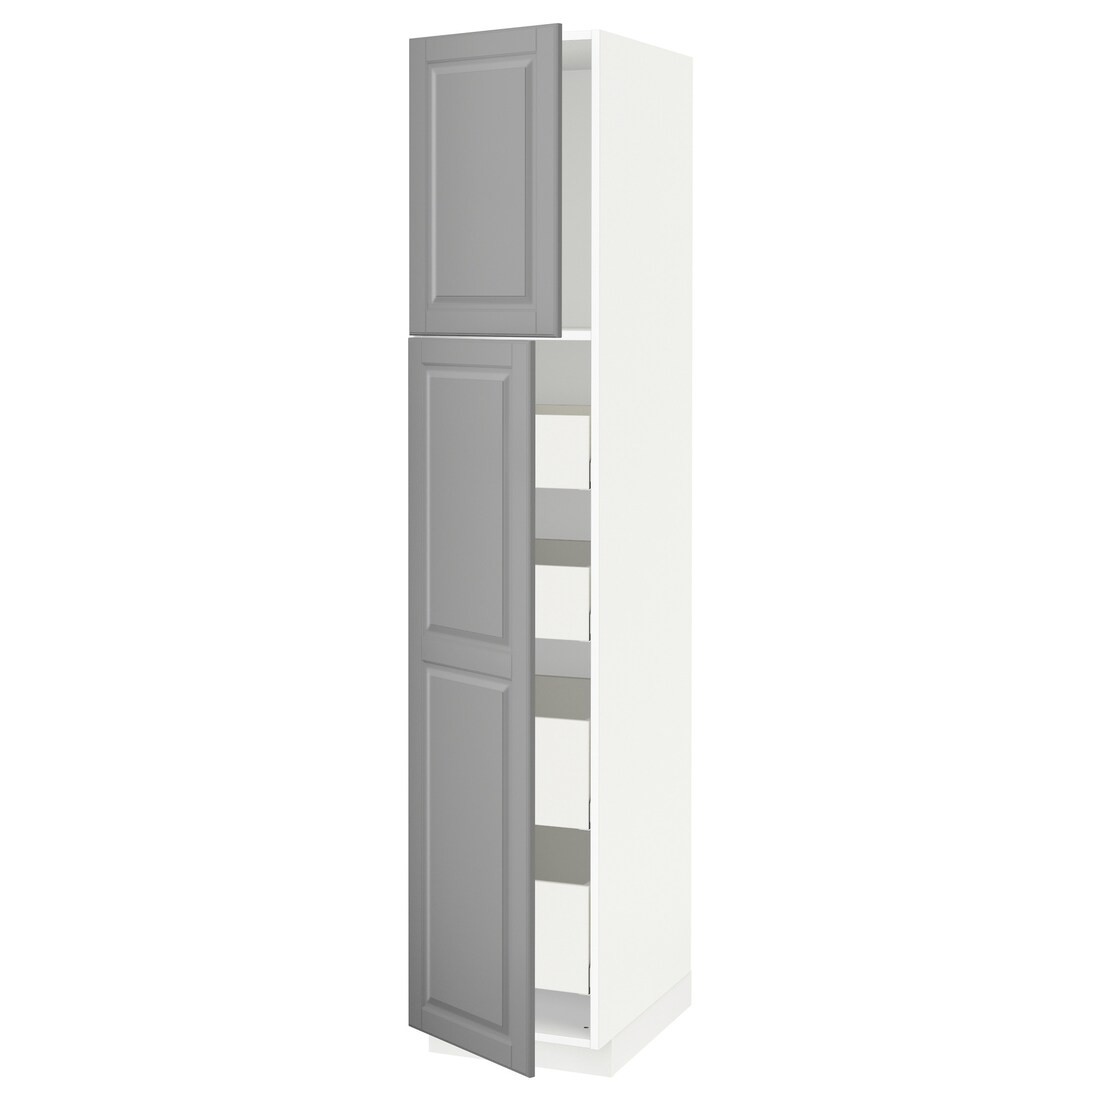 IKEA METOD МЕТОД / MAXIMERA МАКСИМЕРА Шкаф высокий 2 двери / 4 ящика, белый / Bodbyn серый, 40x60x200 см 29464914 | 294.649.14